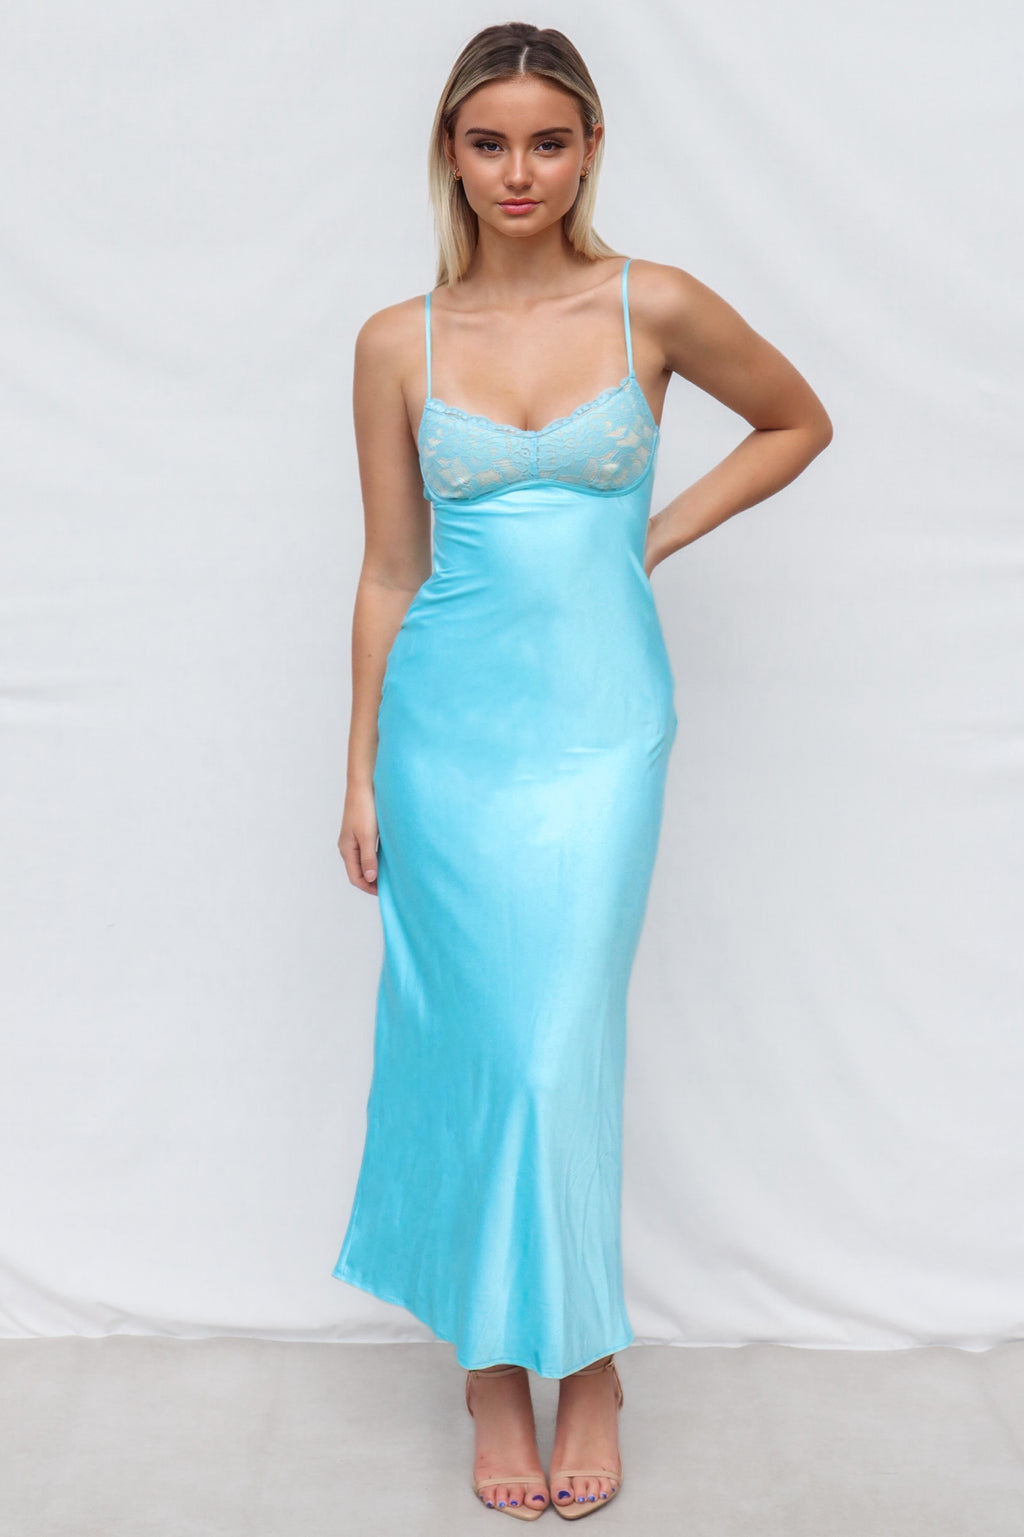 Aniyah Maxi Dress - Blue